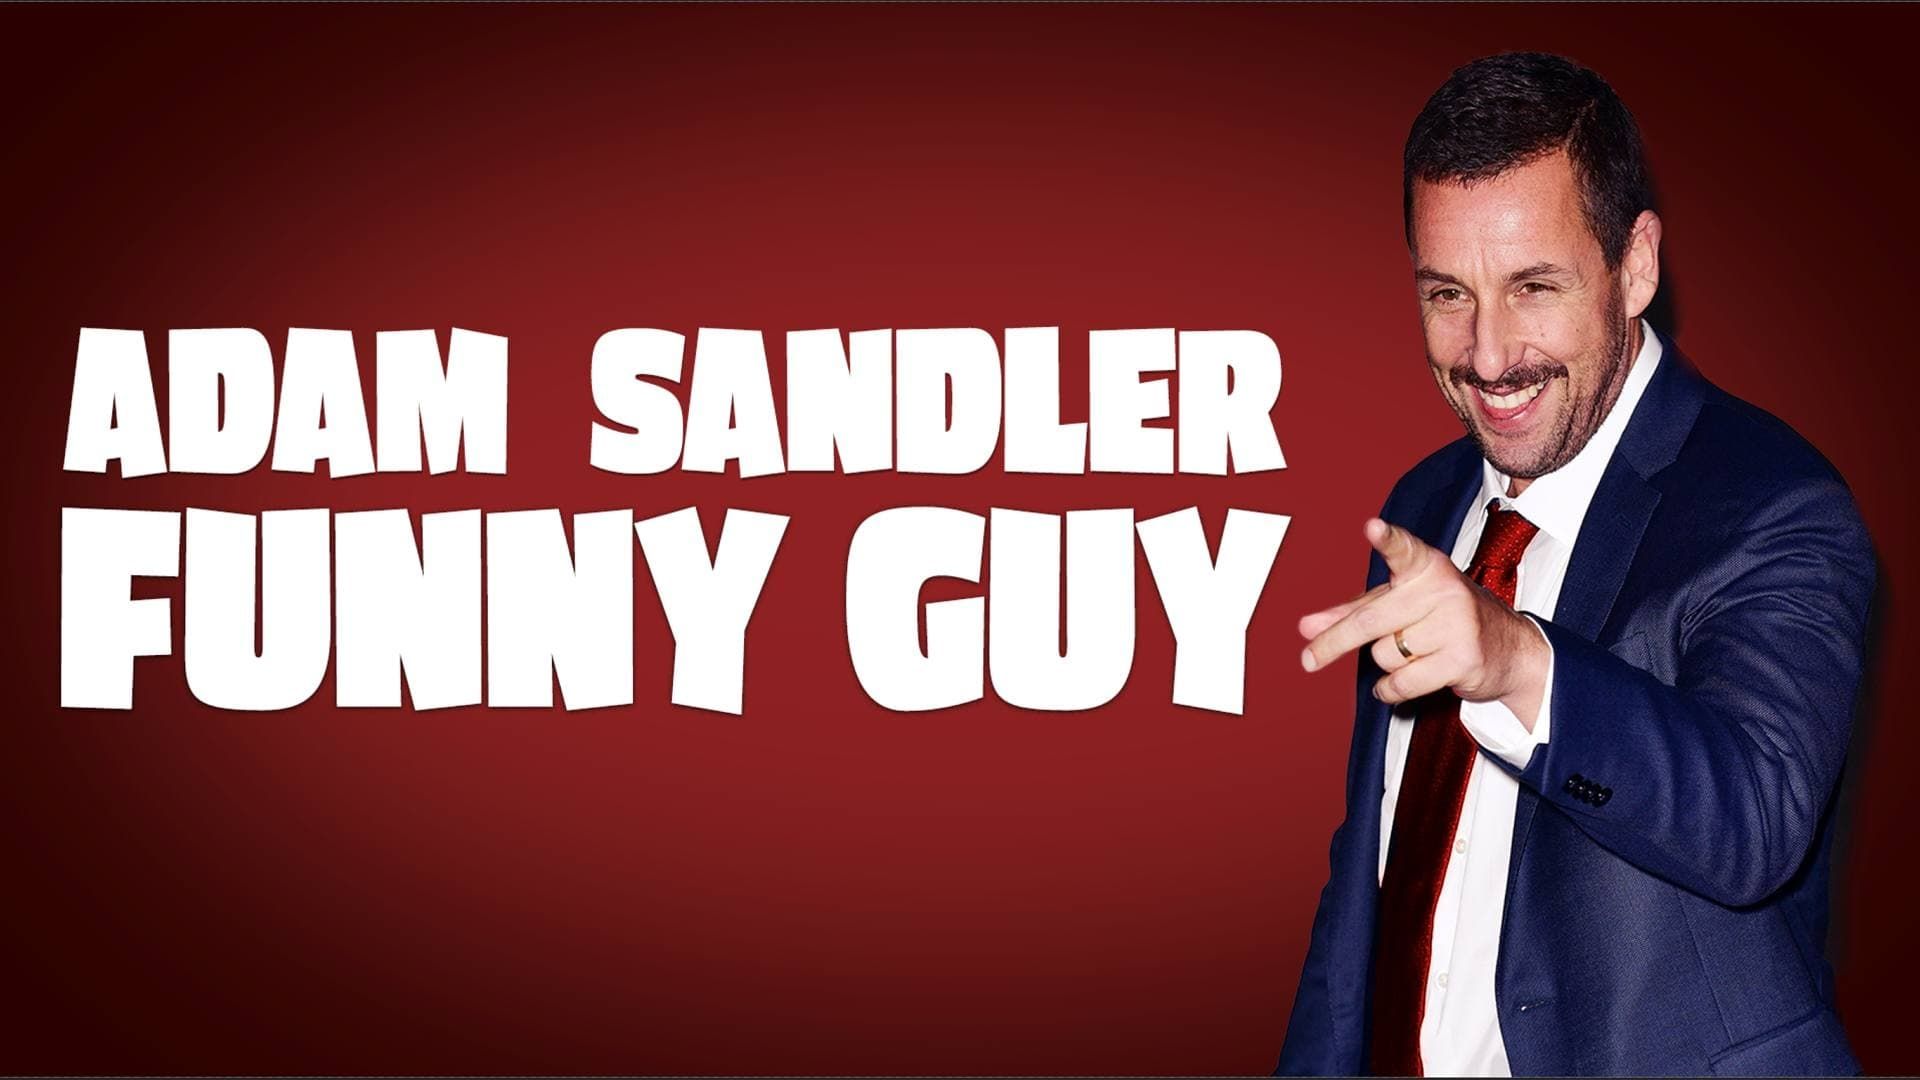 Adam Sandler: Funny Guy background